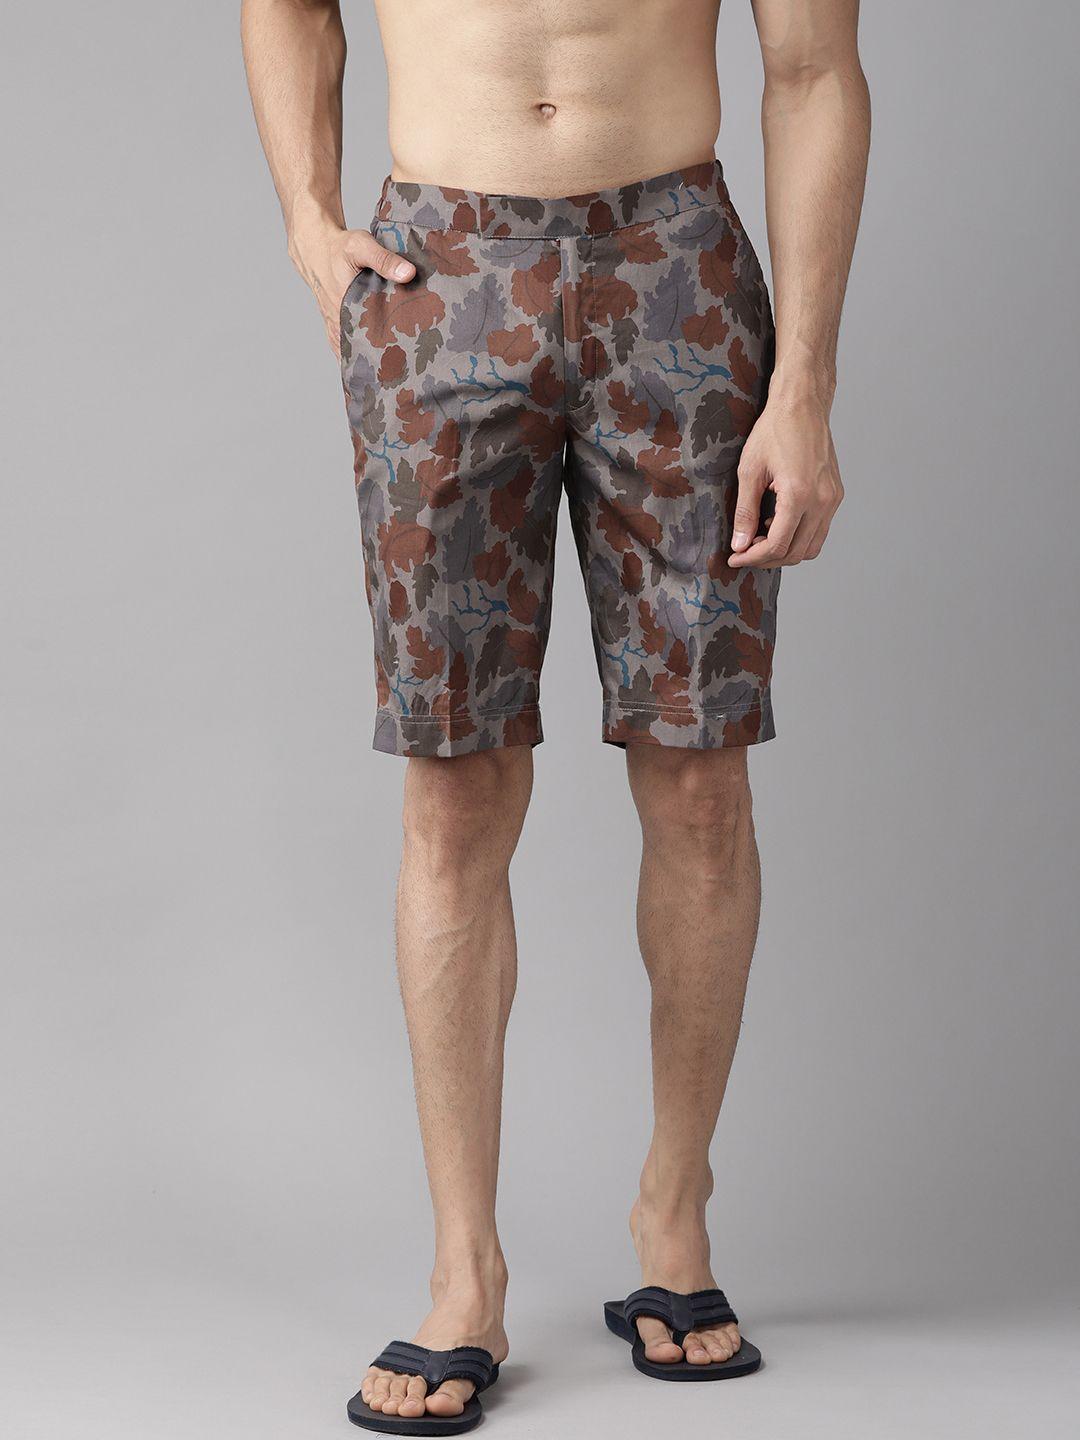 shaftesbury london men grey & rust brown printed slim fit surfing sports shorts